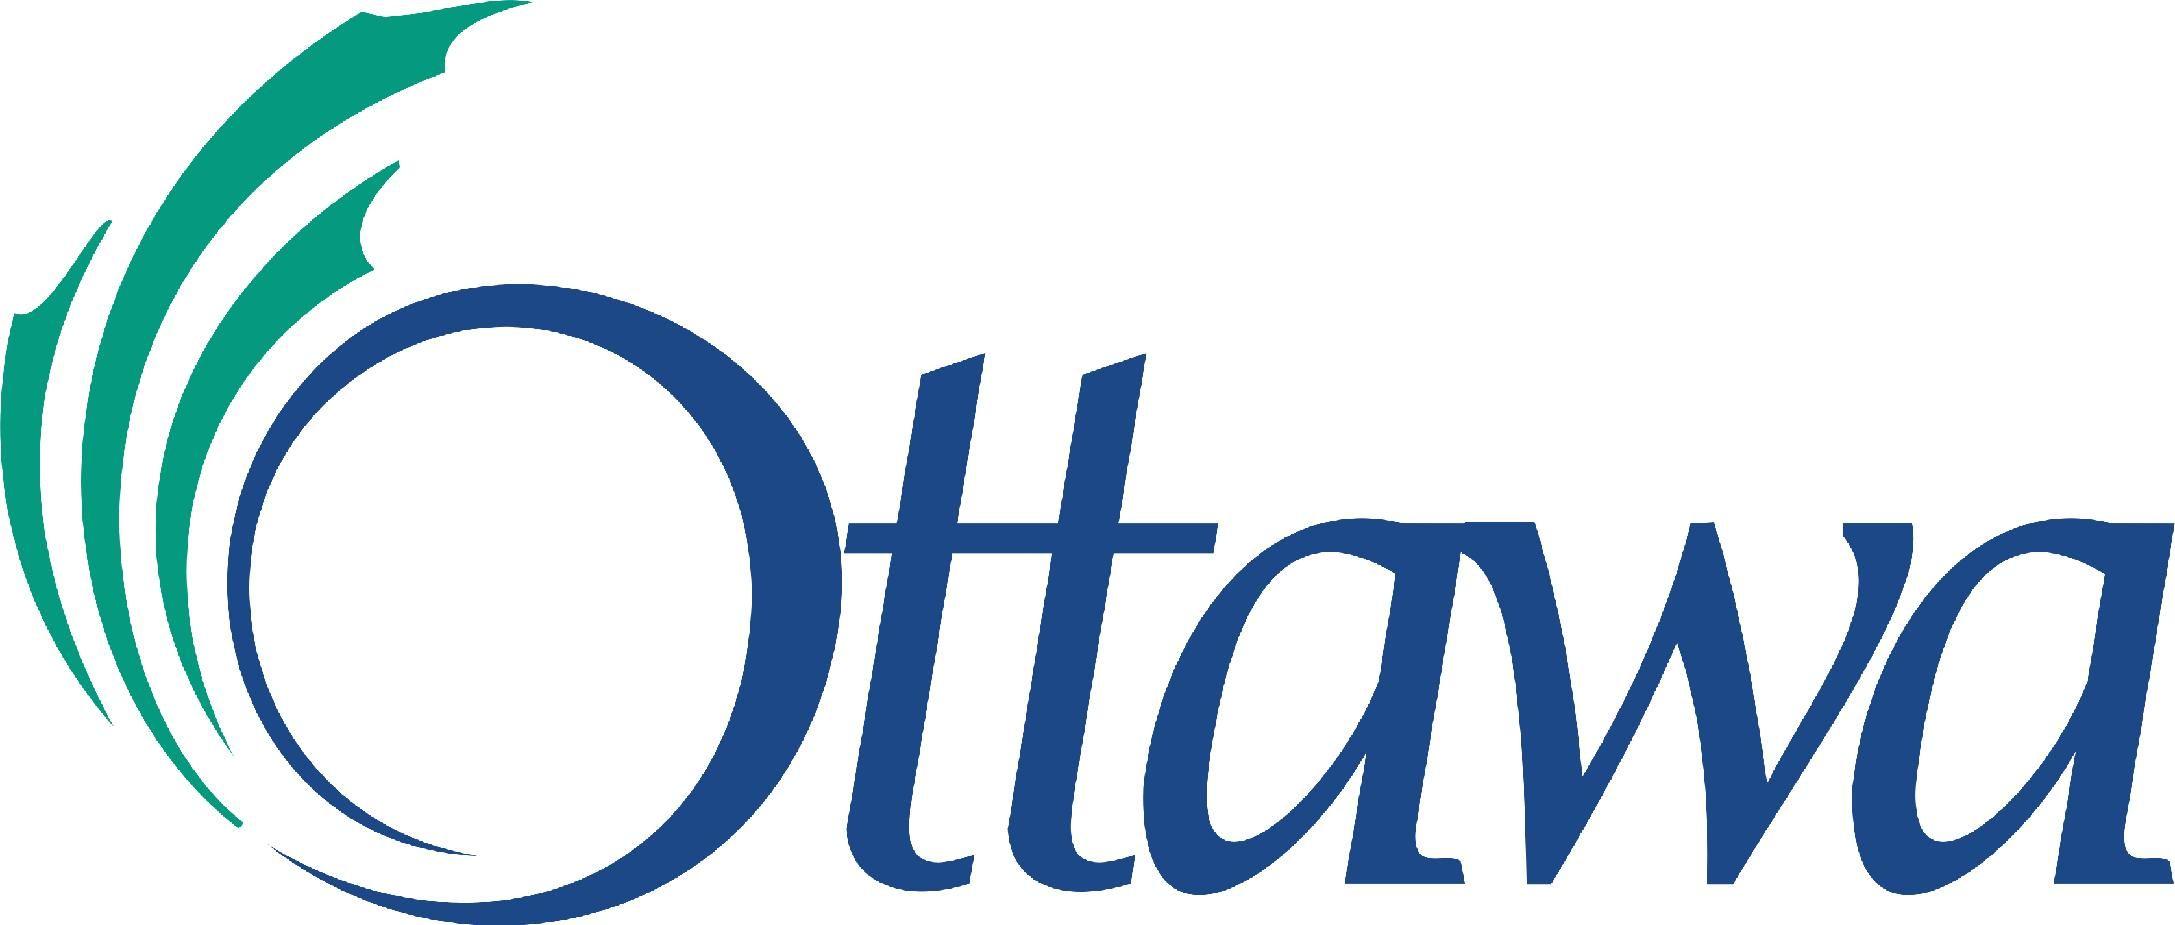 Ottawa Logo - city-of-ottawa-logo - Just Food - sustainable food and farming in ...